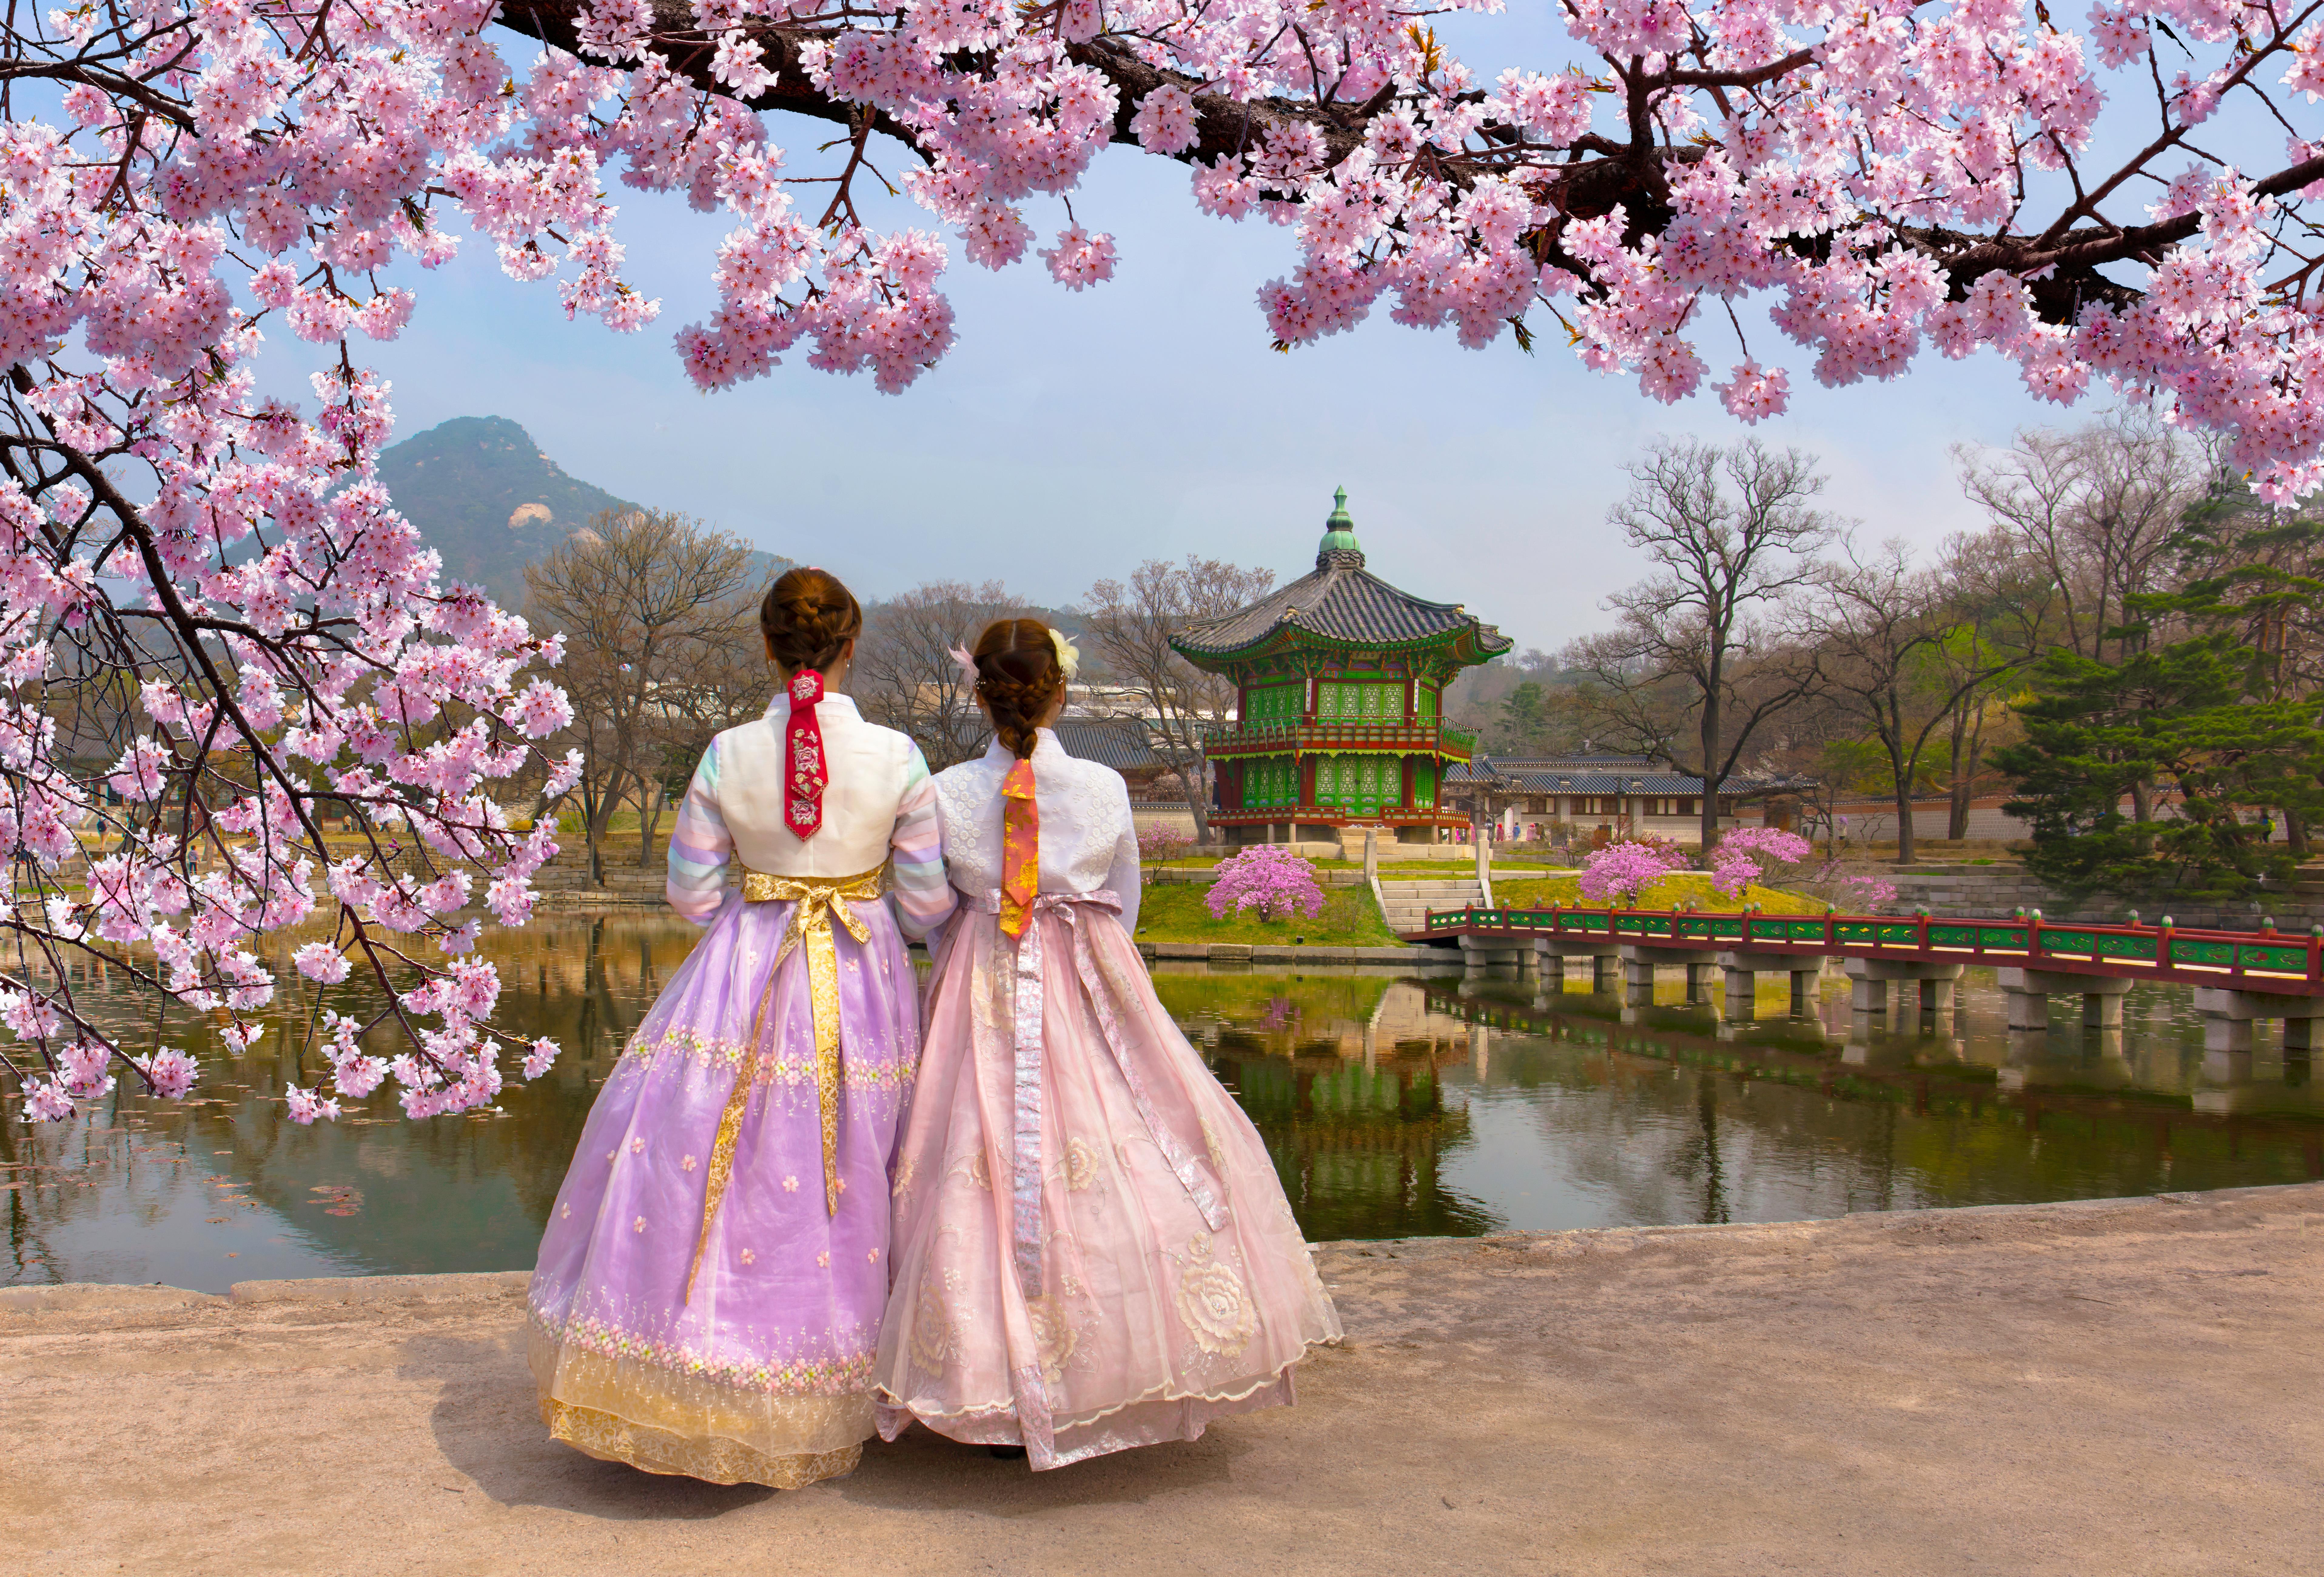 South japan. Корея черри блоссом. Сеул дворец кёнбоккун Сакура цветет. Цветение Сакуры в Южной Корее. Сеул Южная Корея Cherry Blossom.